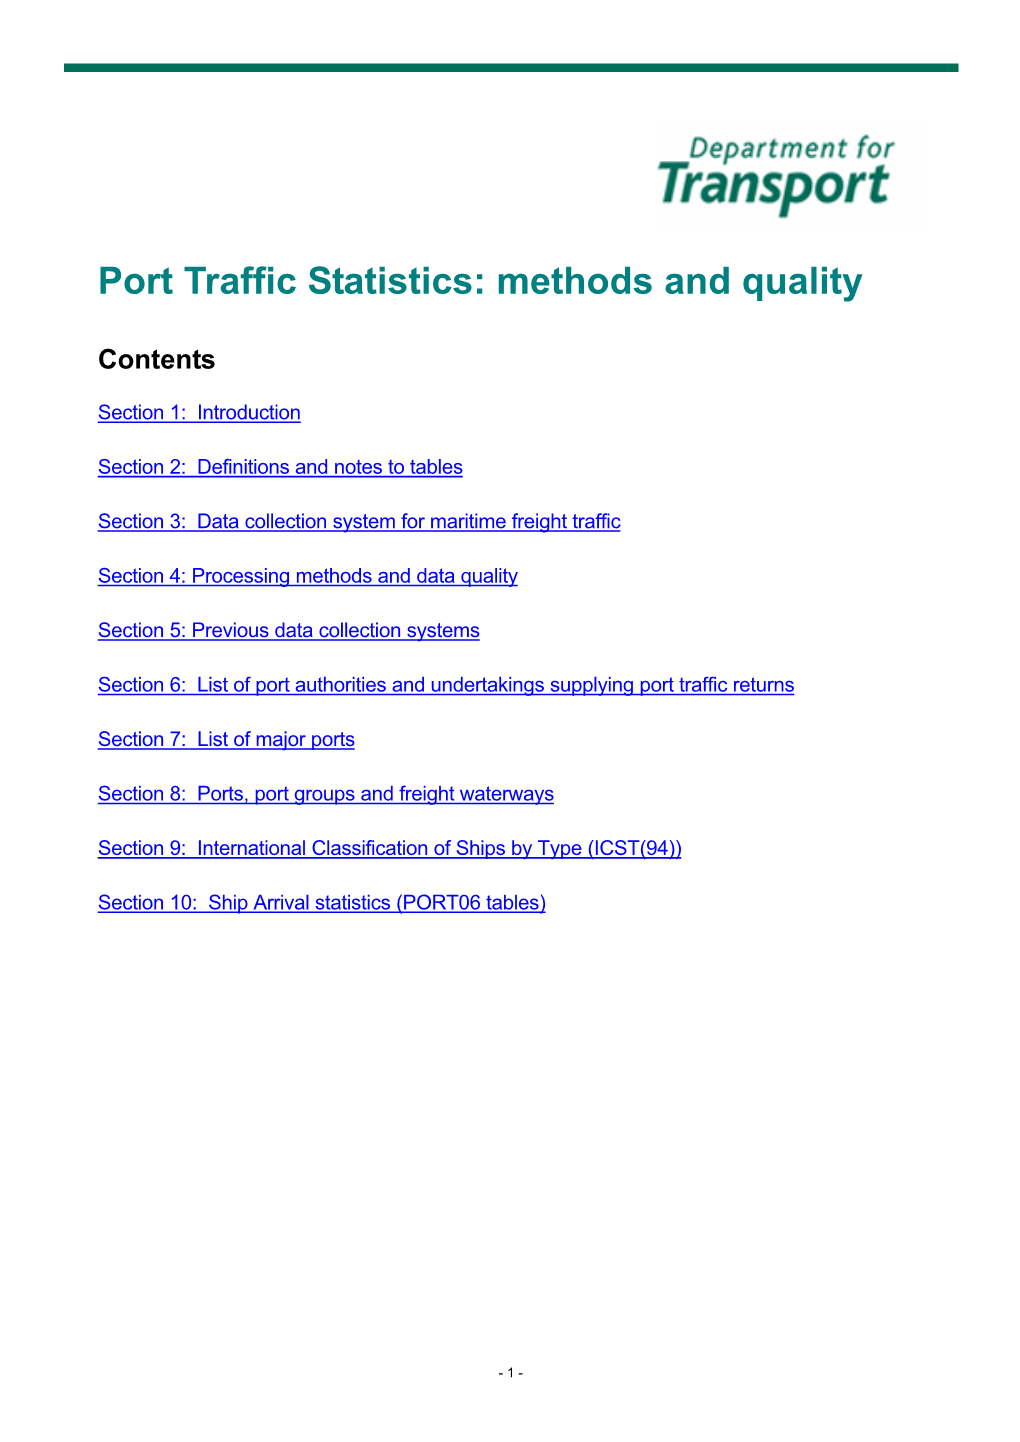 Port Traffic Statistics: Methods and Quality